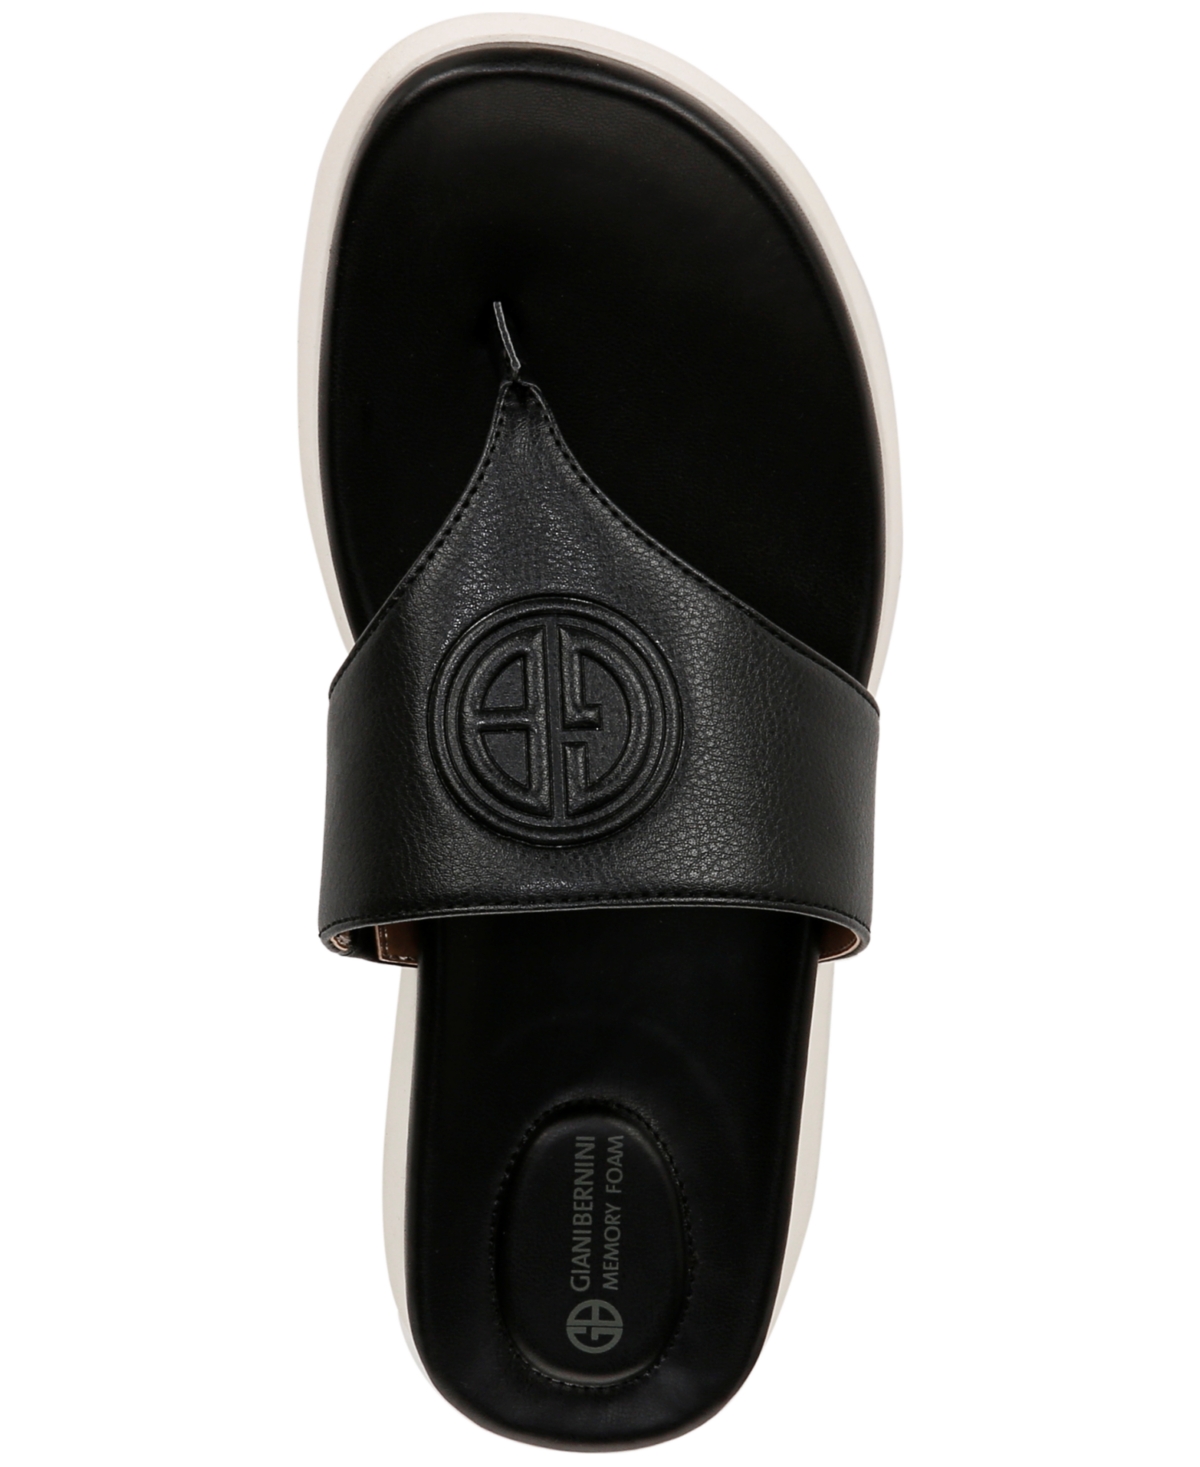 Shop Giani Bernini Cindey Sport Memory Foam Flat Thong Sandals, Created For Macy's In Light Blue